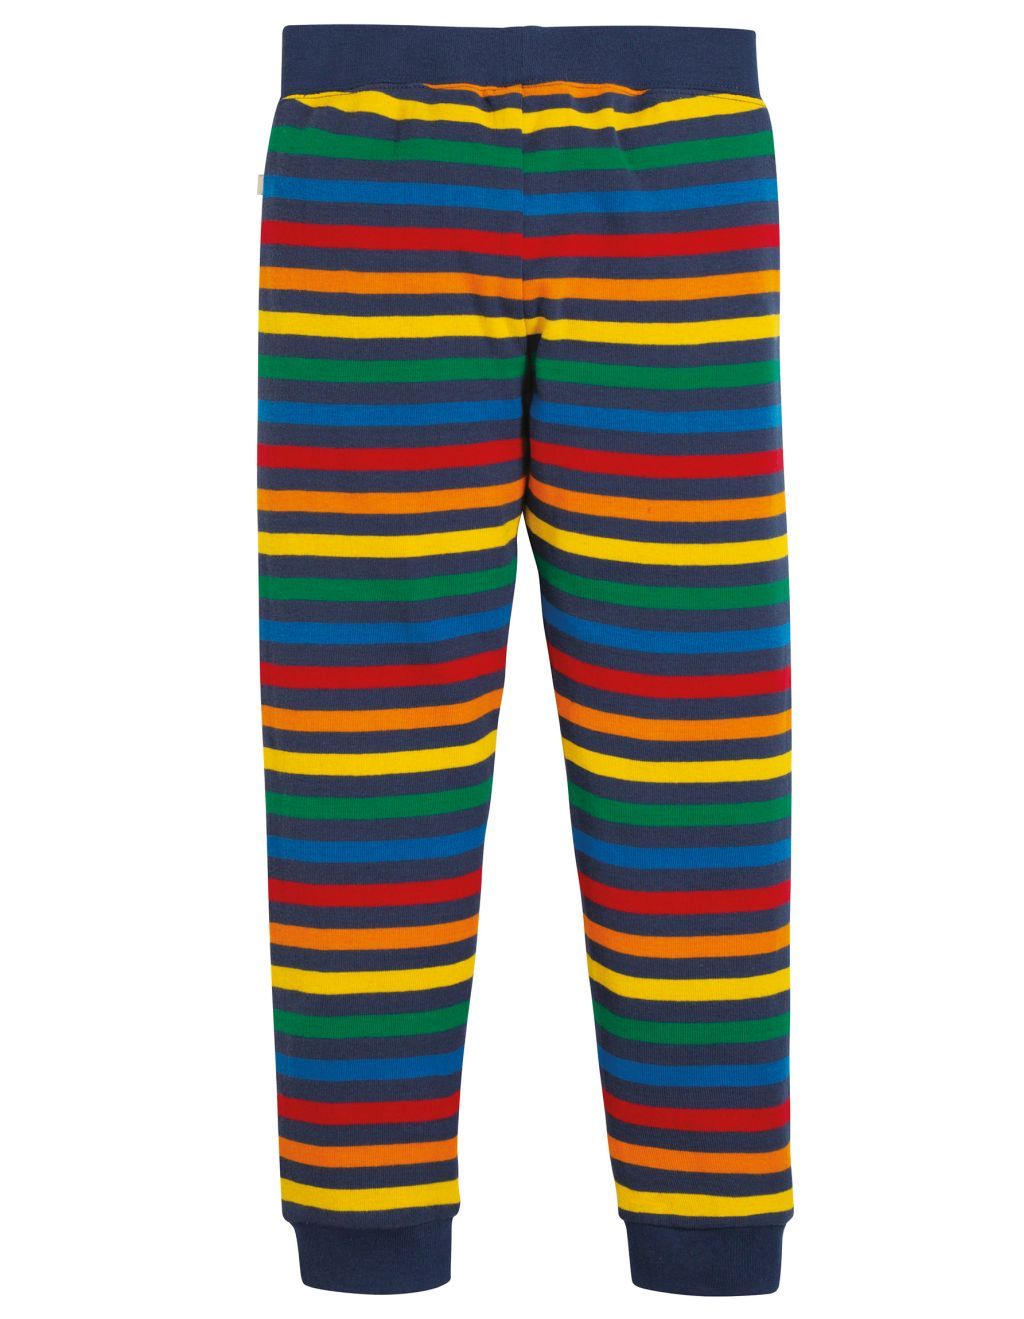 Leap About Cuffed Legging Rainbow Stripe Aw1 92/98